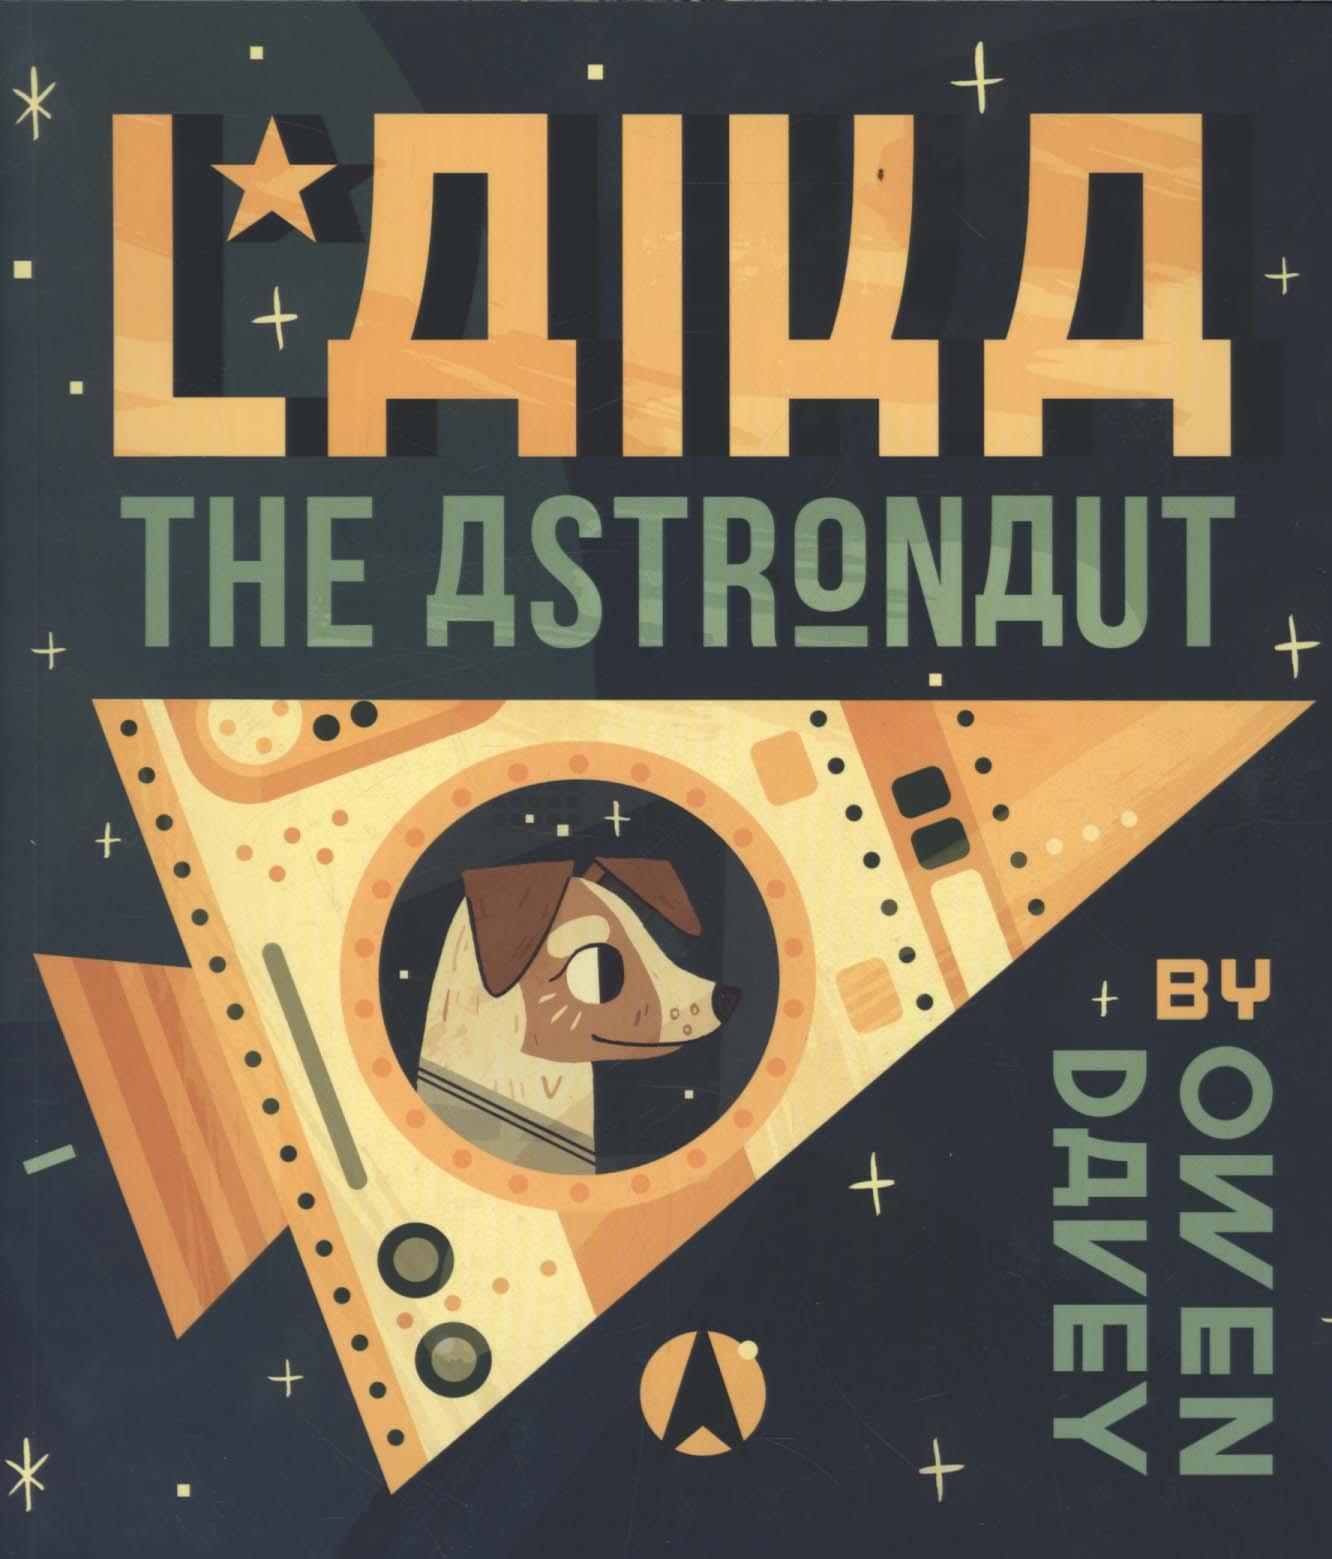 Laika the Astronaut